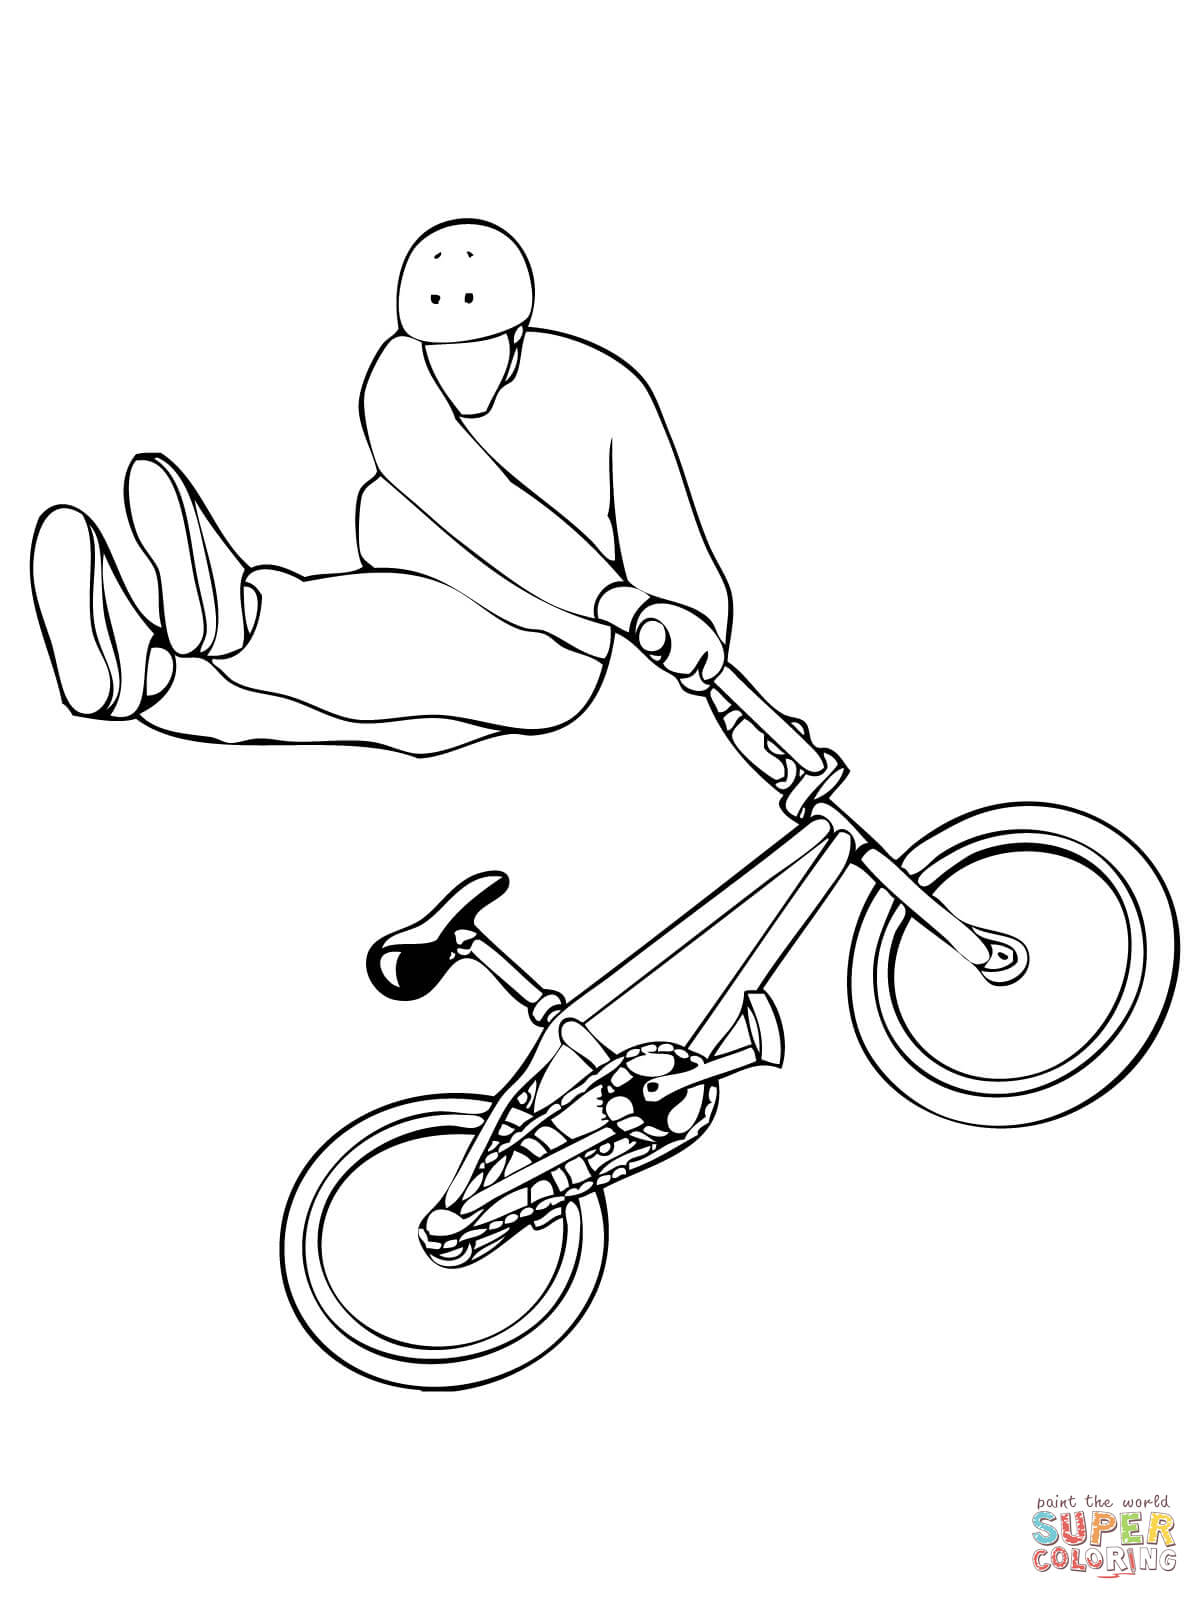 Tail Whip BMX - BMX Biker coloring page